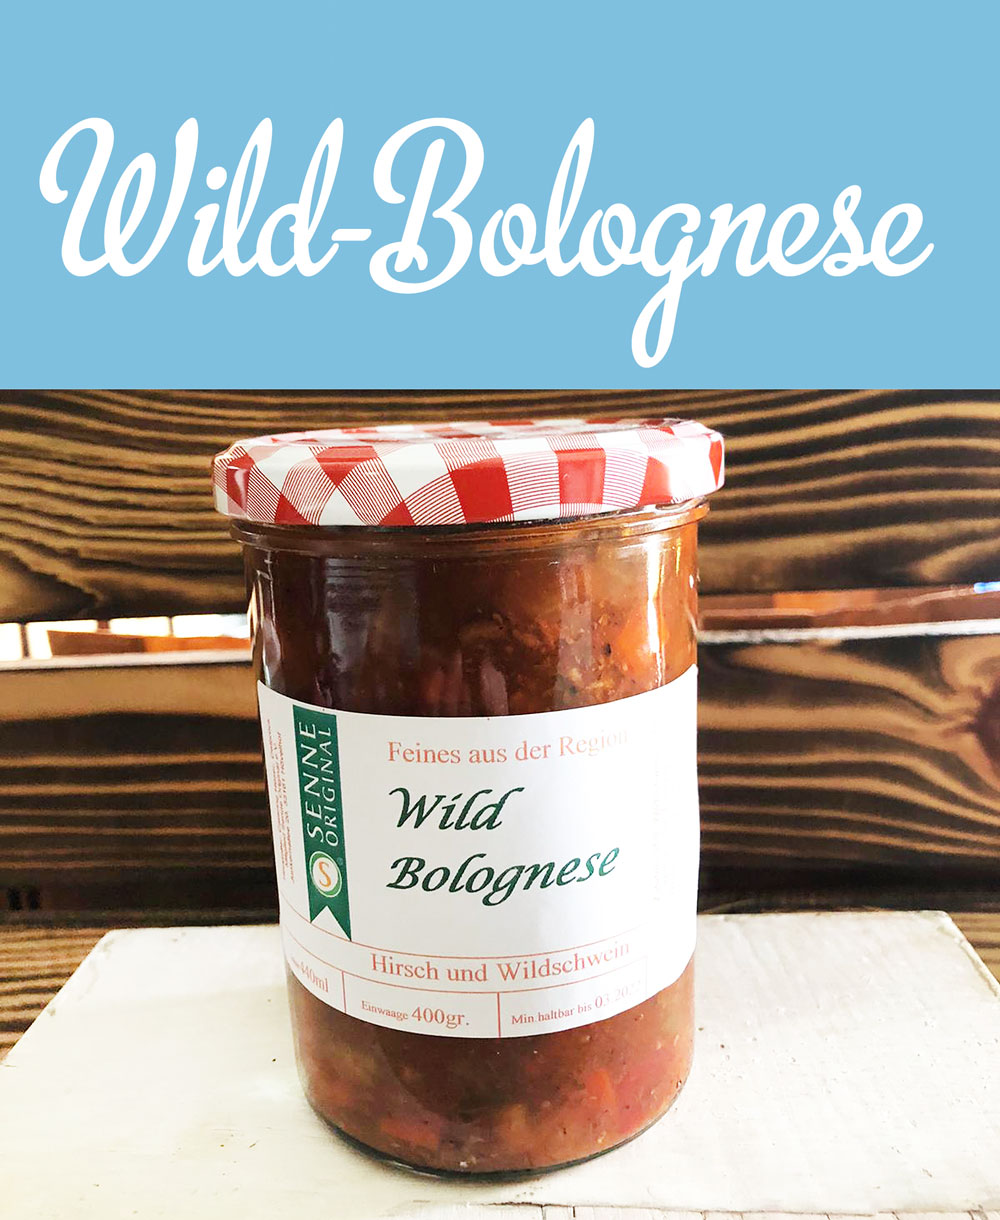 Wild-Bolognese